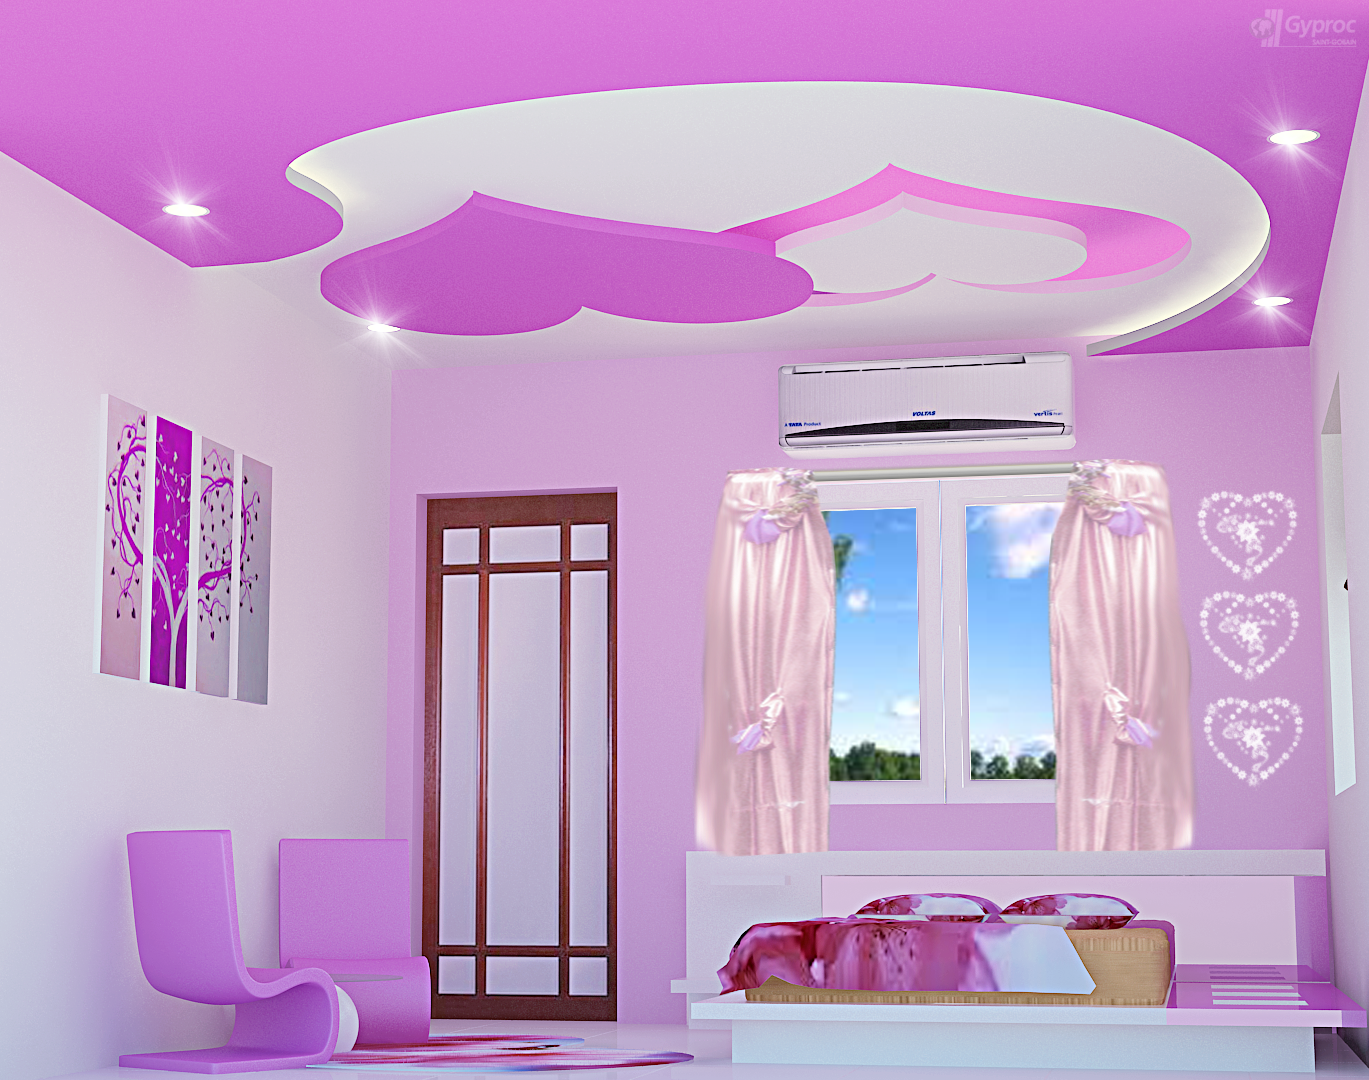 wallpaper for bedroom walls india,ceiling,pink,room,interior design,purple